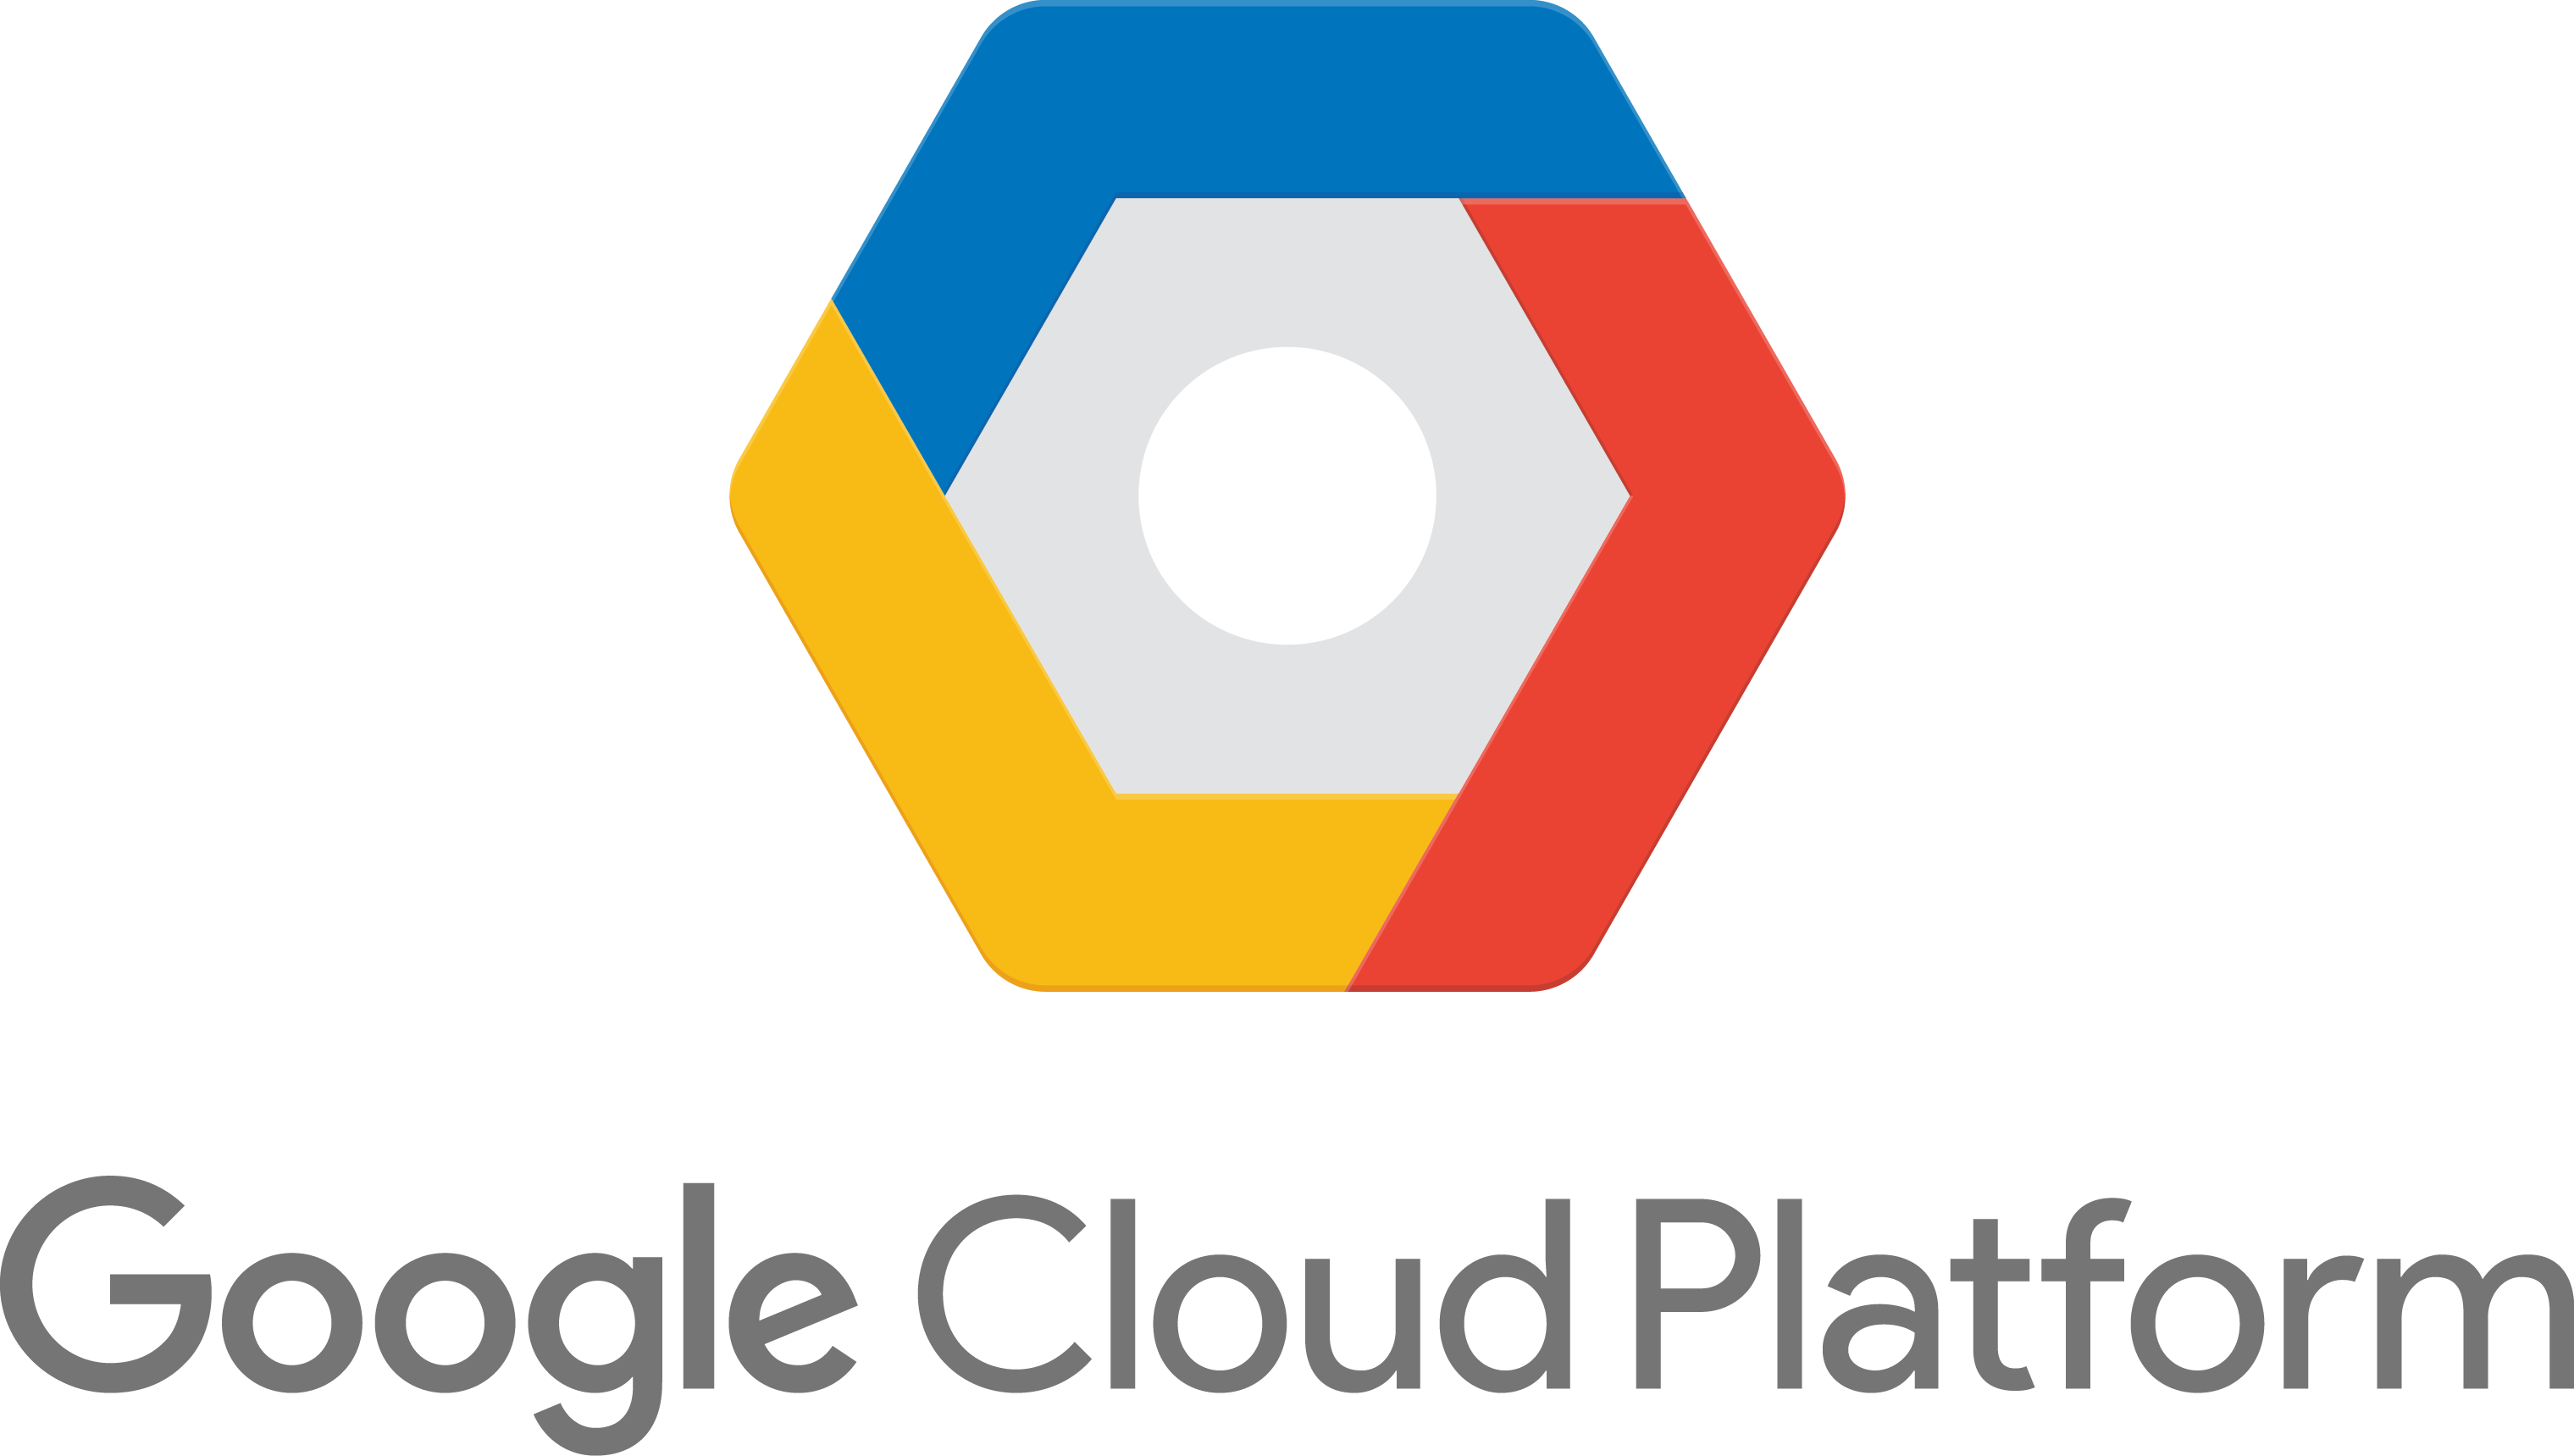 Download Google Cloud Platform Logo   Google Cloud Logo Svg   Full Pluspng.com  - Google Cloud, Transparent background PNG HD thumbnail